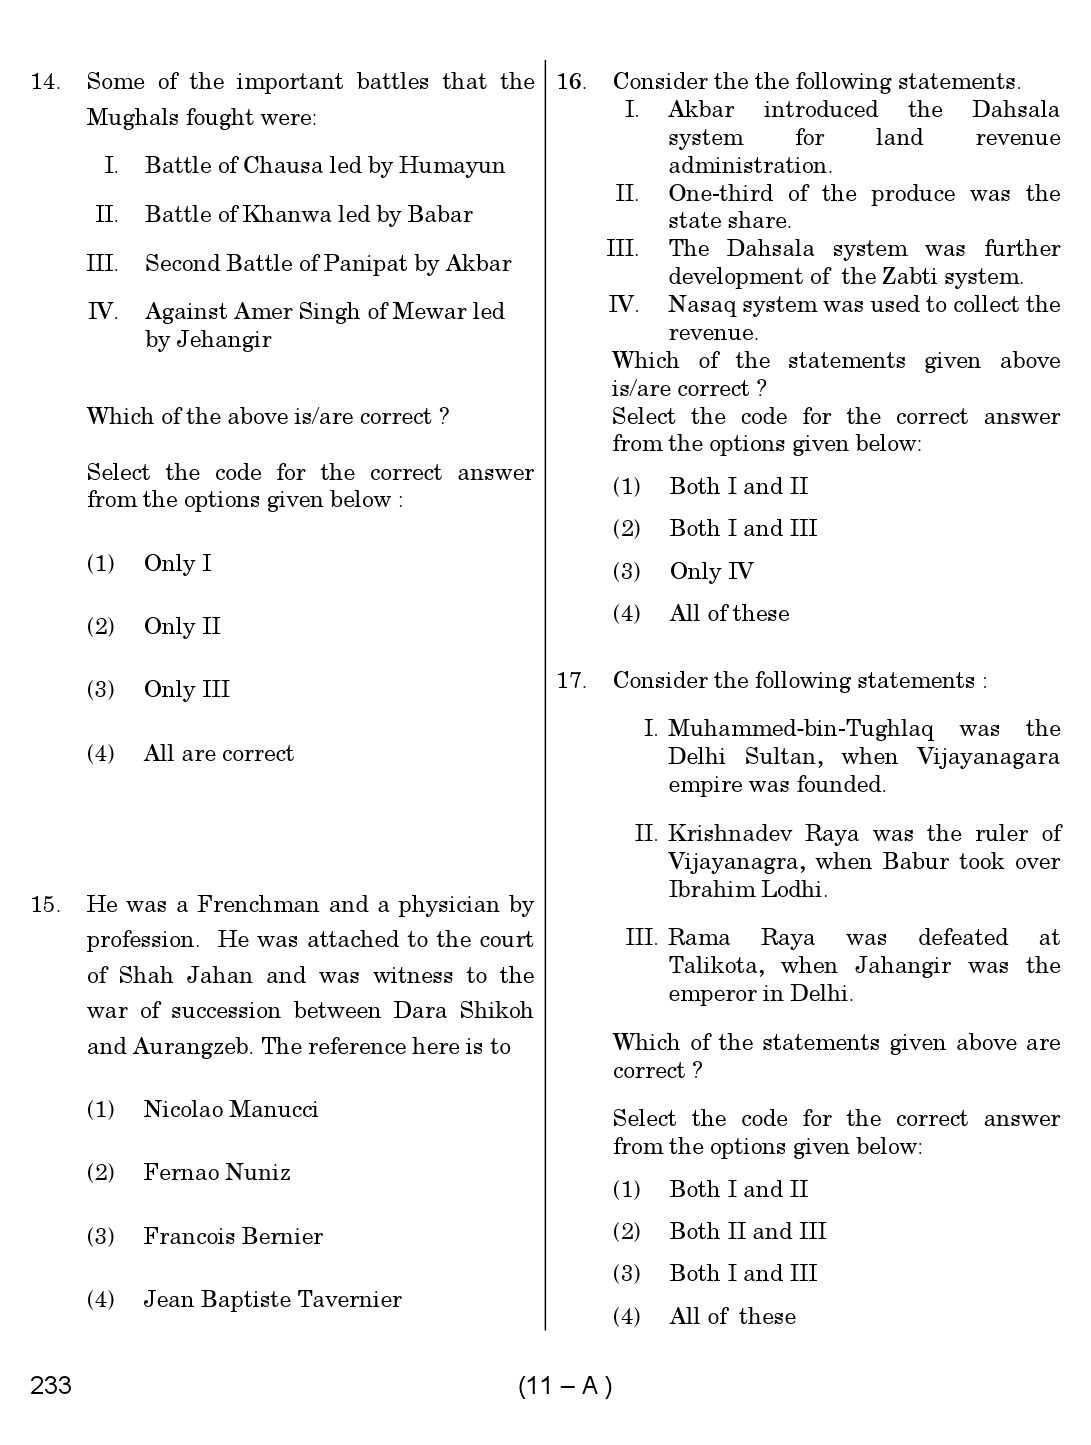 Karnataka PSC History Teacher Exam Sample Question Paper Subject code 233 11